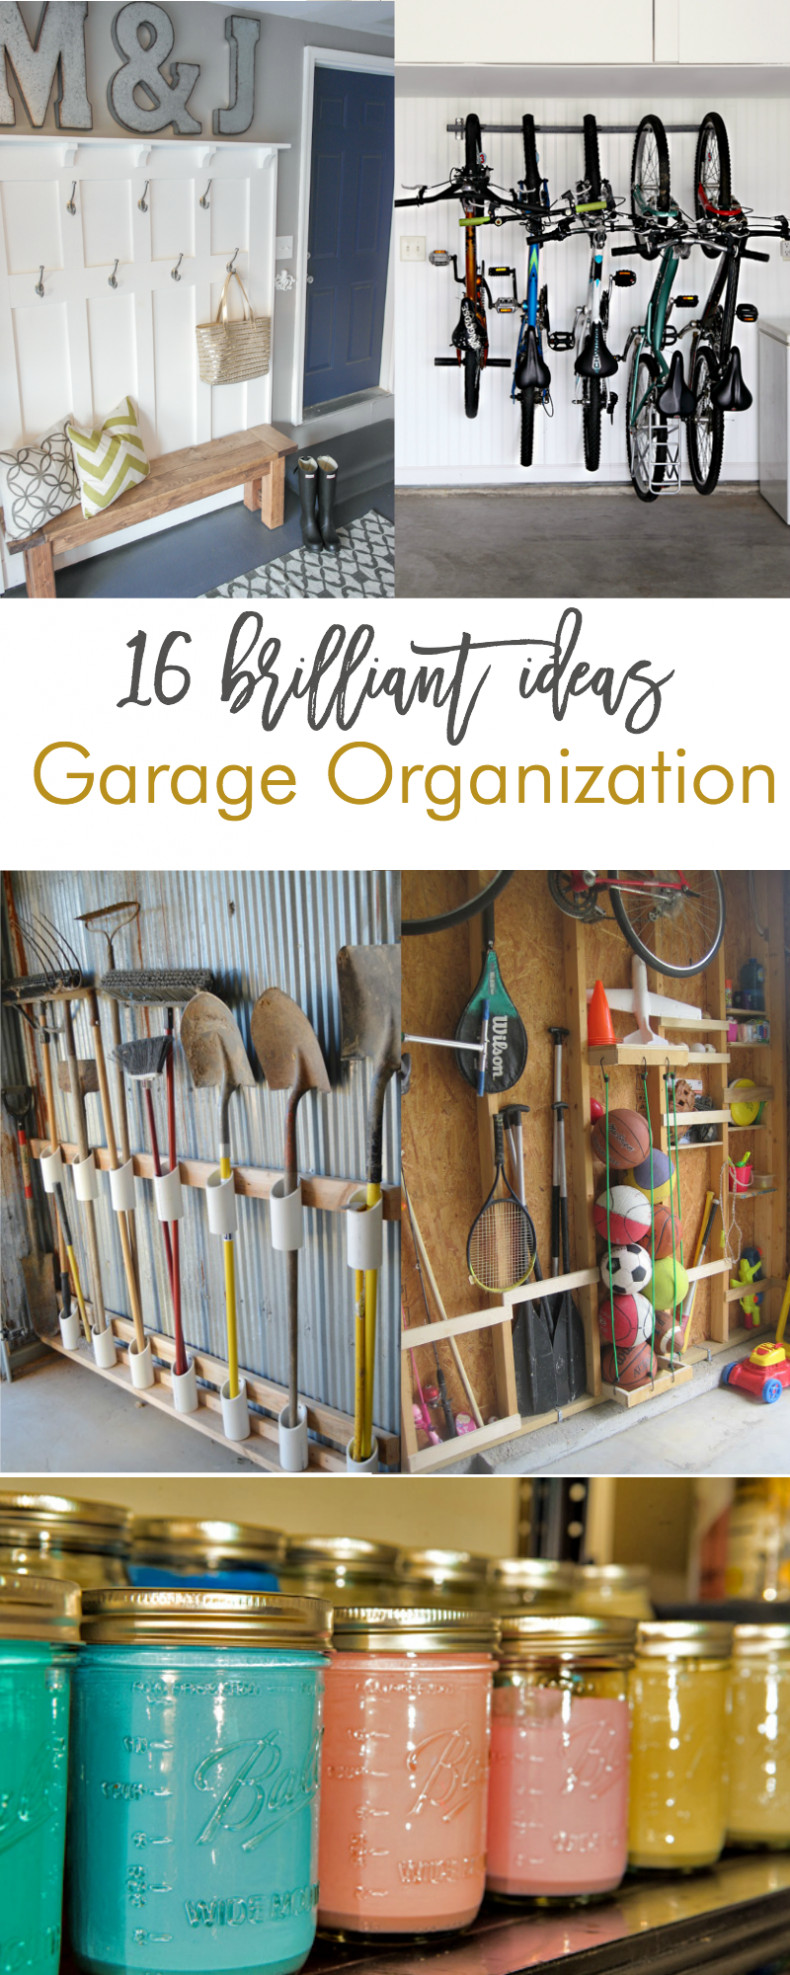 Best ideas about Diy Garage Ideas
. Save or Pin 16 Brilliant DIY Garage Organization Ideas Now.